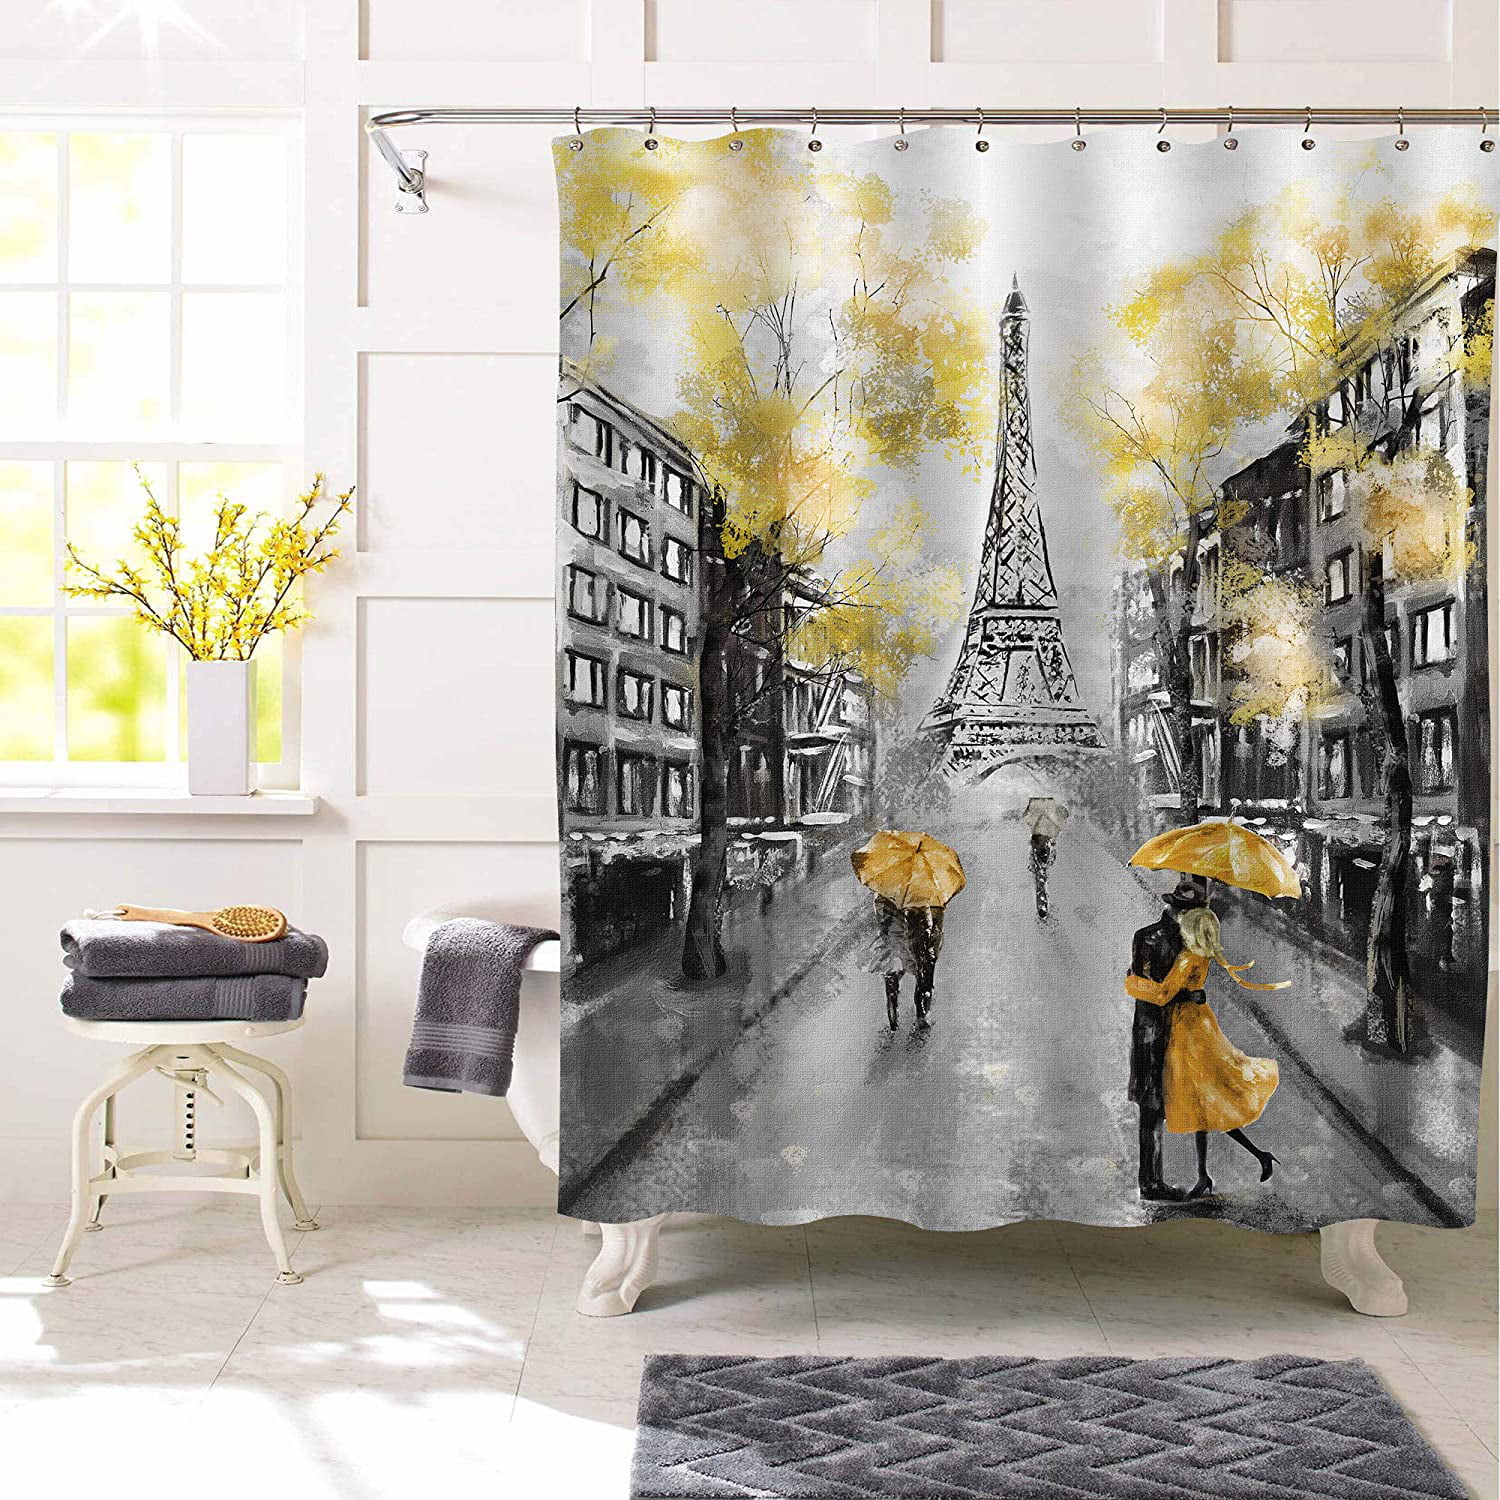 5 Pc Set of Black and Gold Bathroom Vanity Accessory Paris Eiffel Tower Design 